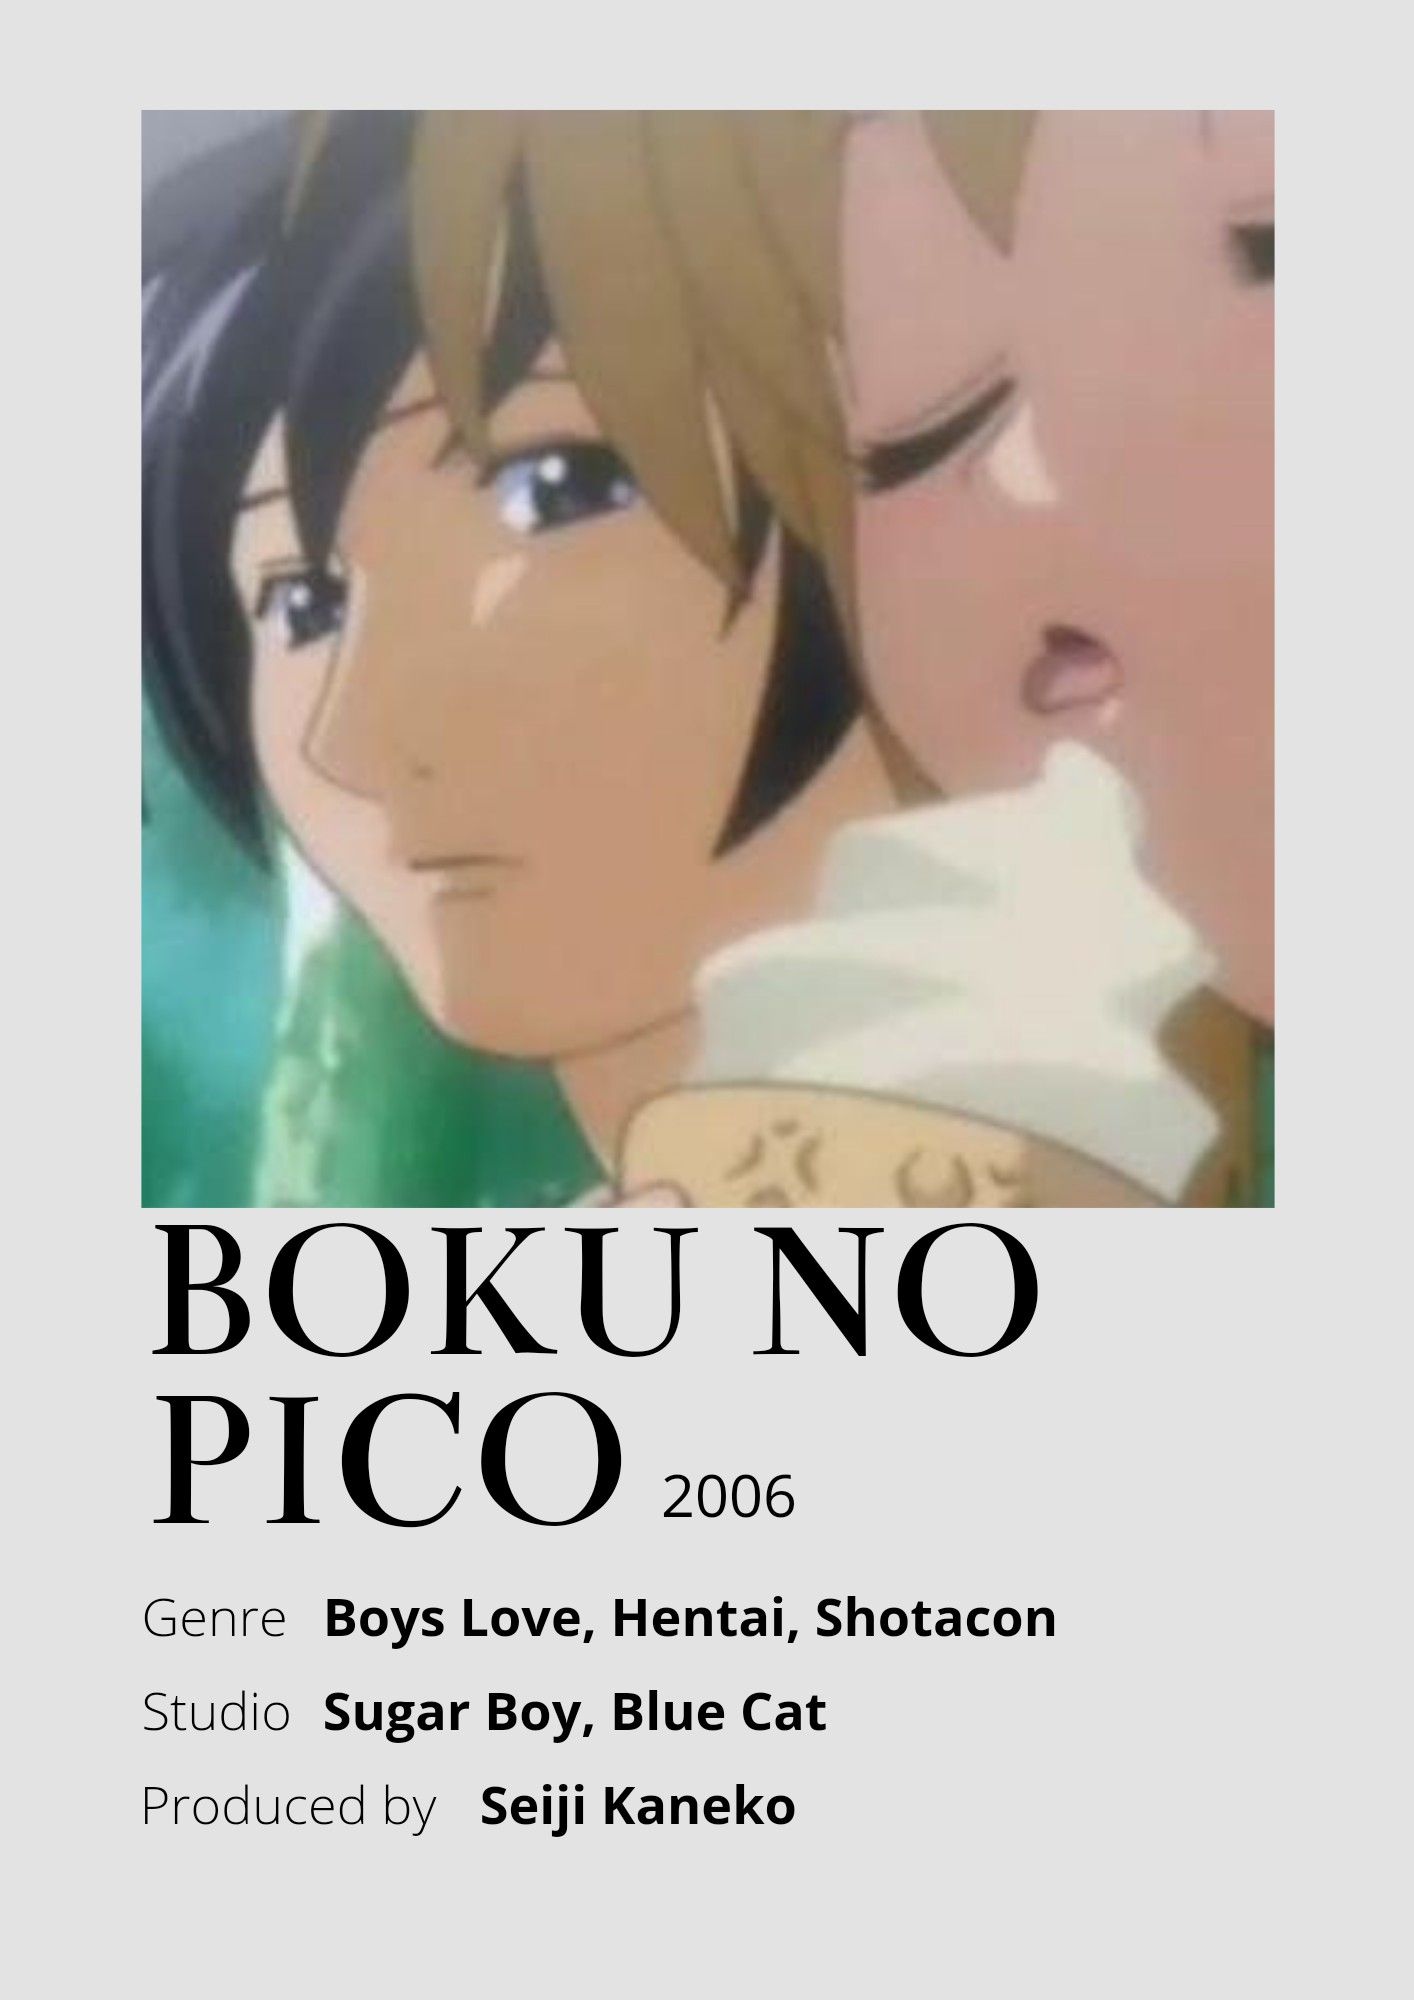 christopher l harrington recommends anime like boku no pico pic